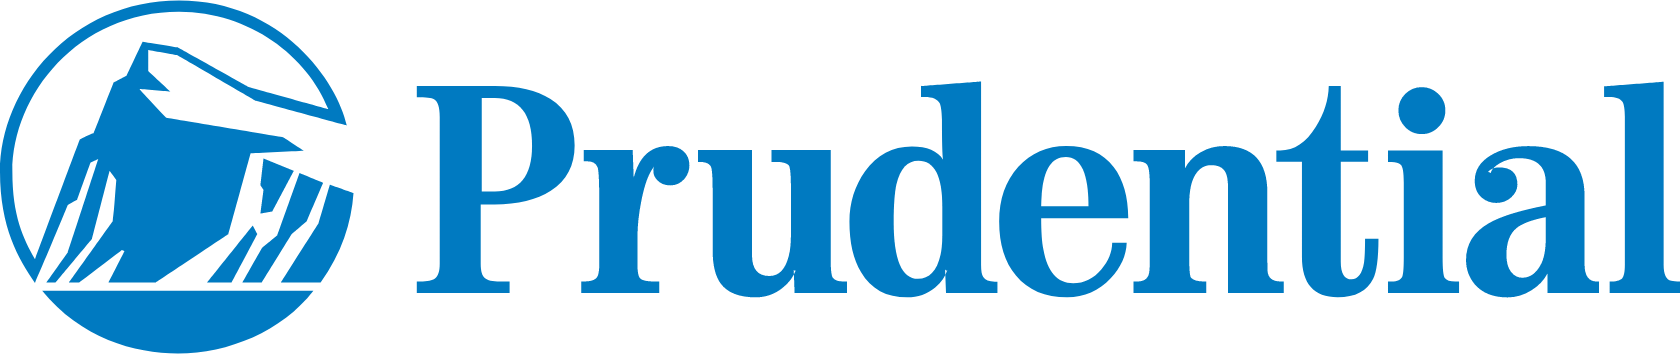 Prudential Financial logo large (transparent PNG)